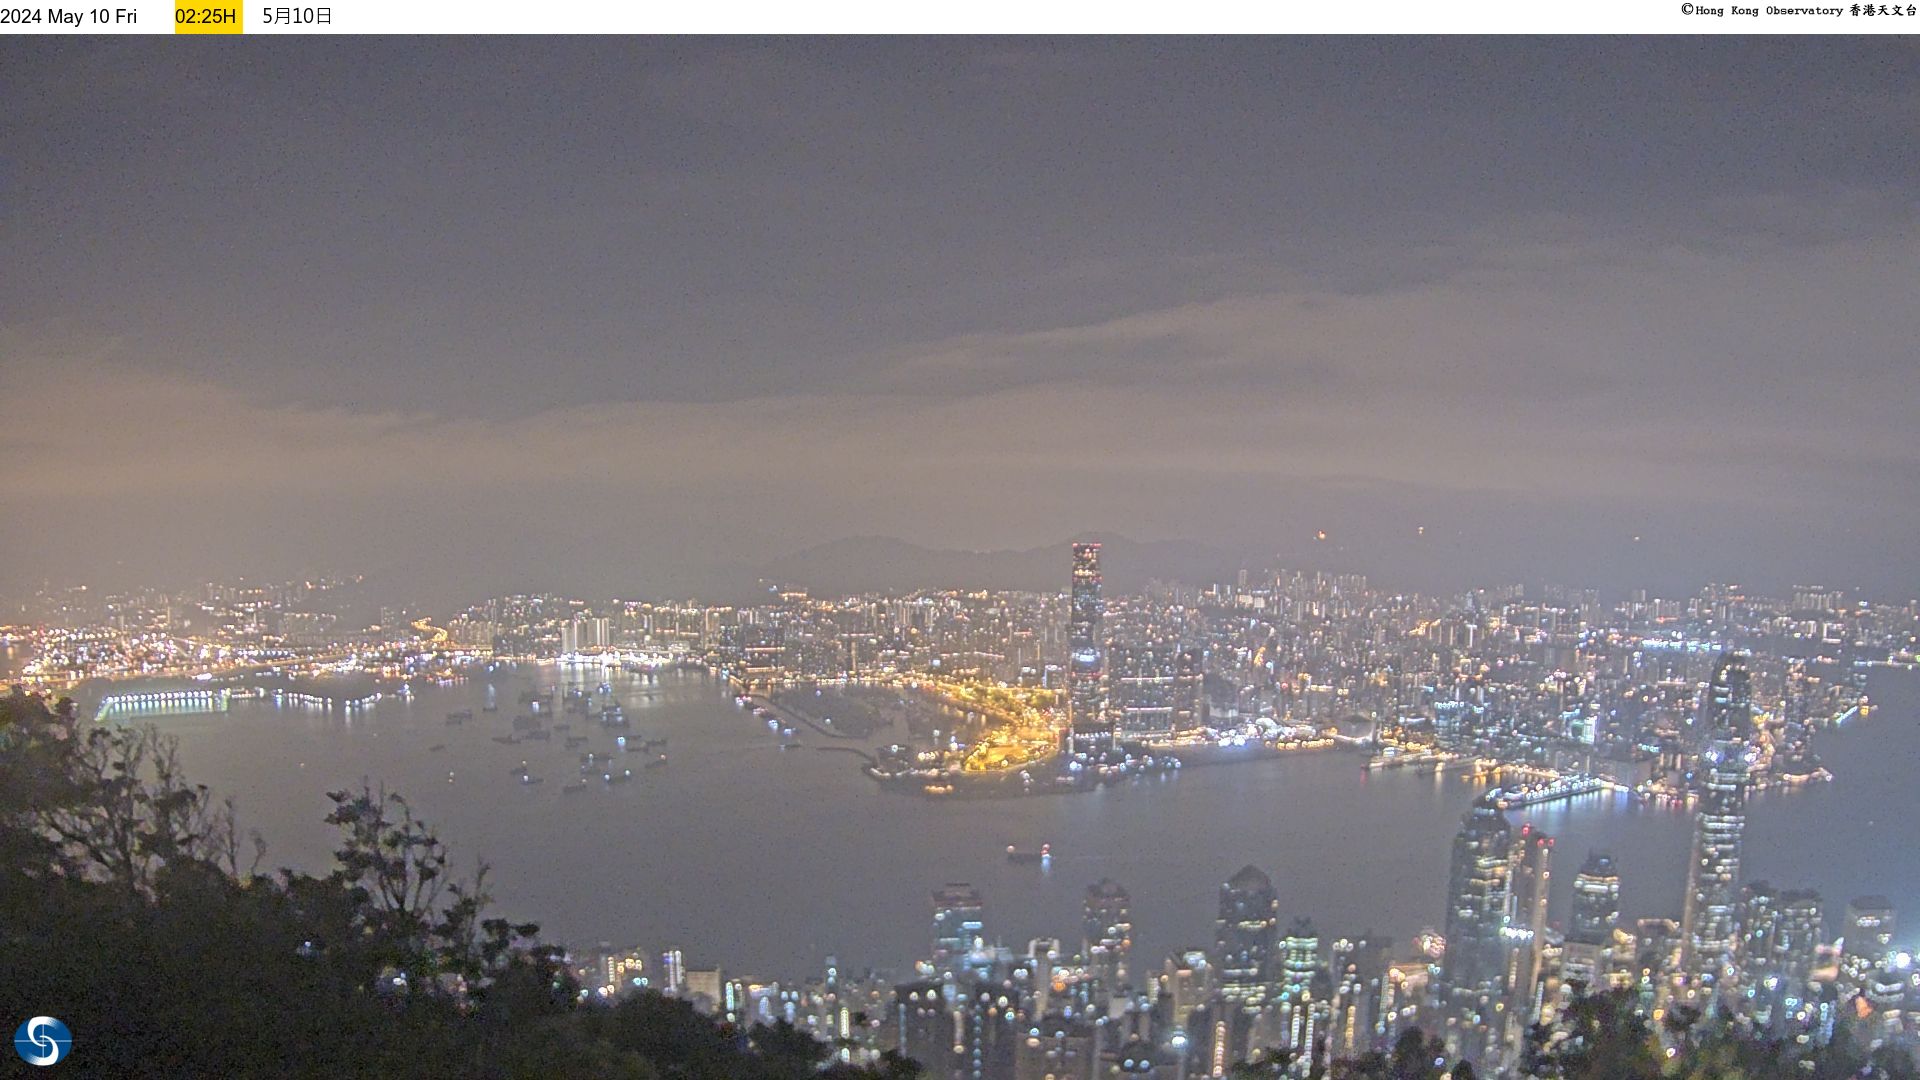 Hong Kong Fr. 02:33